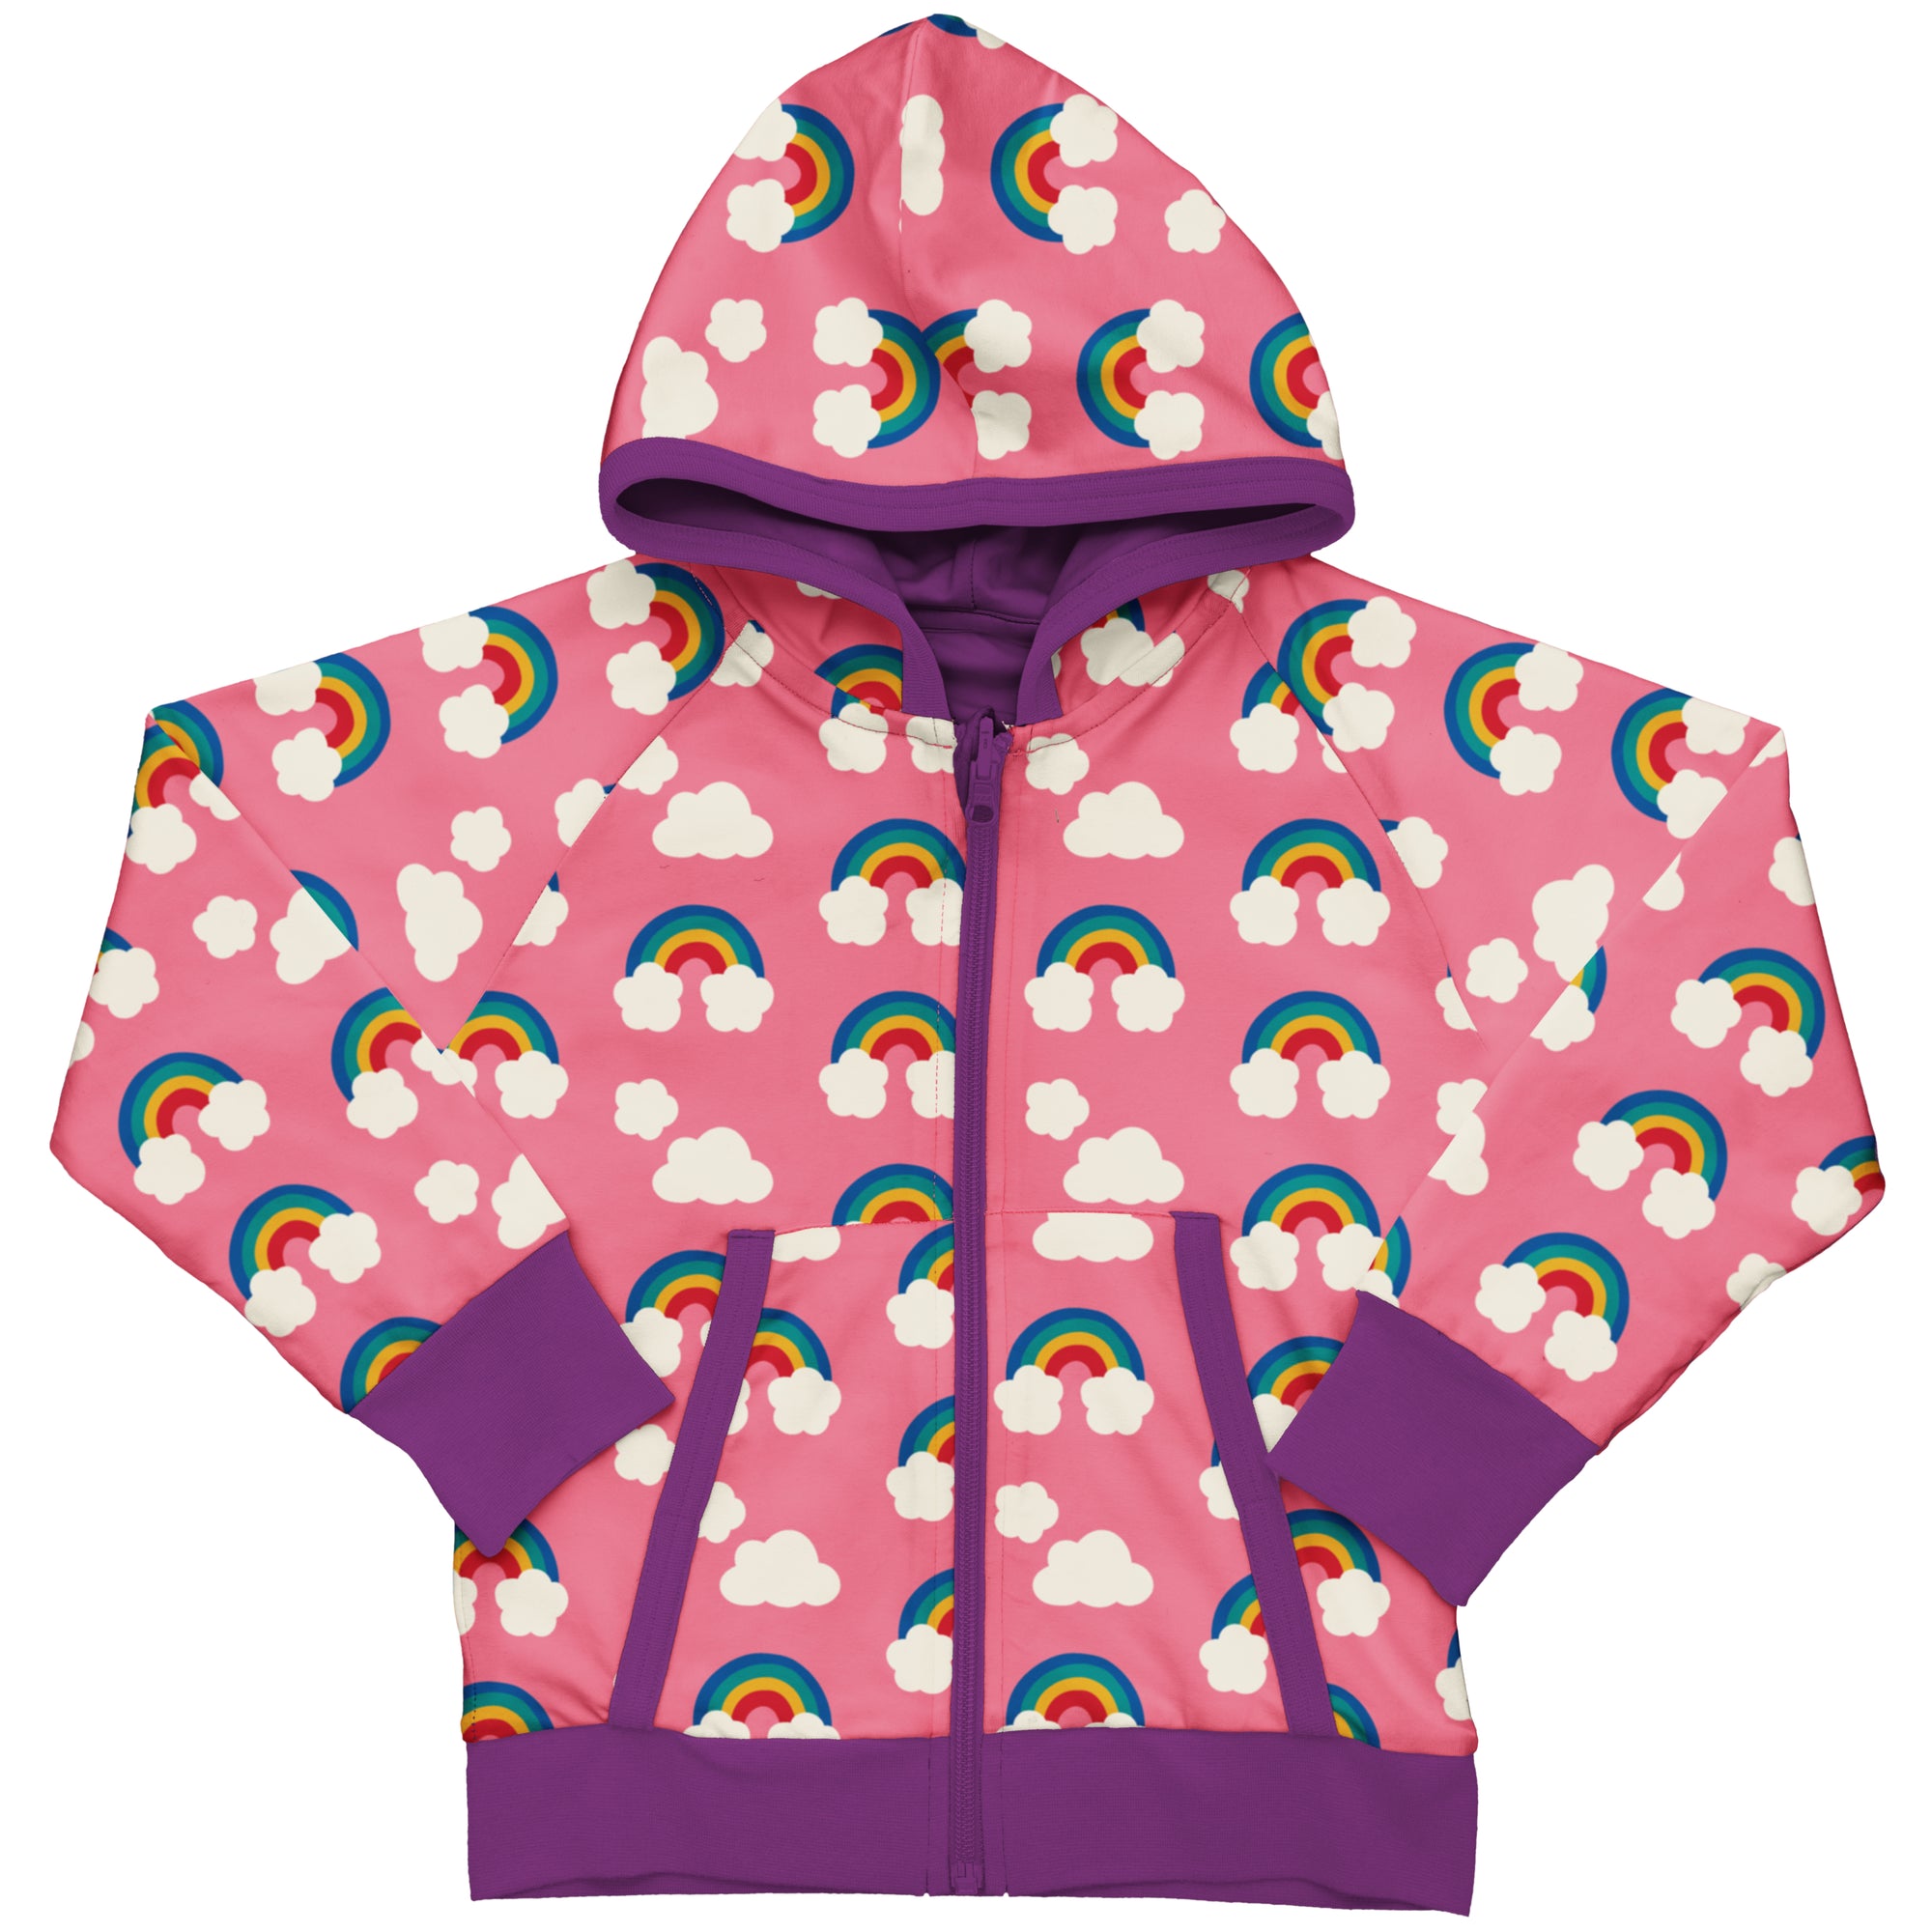 Maxomorra Pink Rainbow Reversible Hooded Sweatshirt Dxa2306 Clothing 3-4YRS / Pink,5-6YRS / Pink,7-8YRS / Pink,9-10YRS / Pink,1-2 YRS / Pink